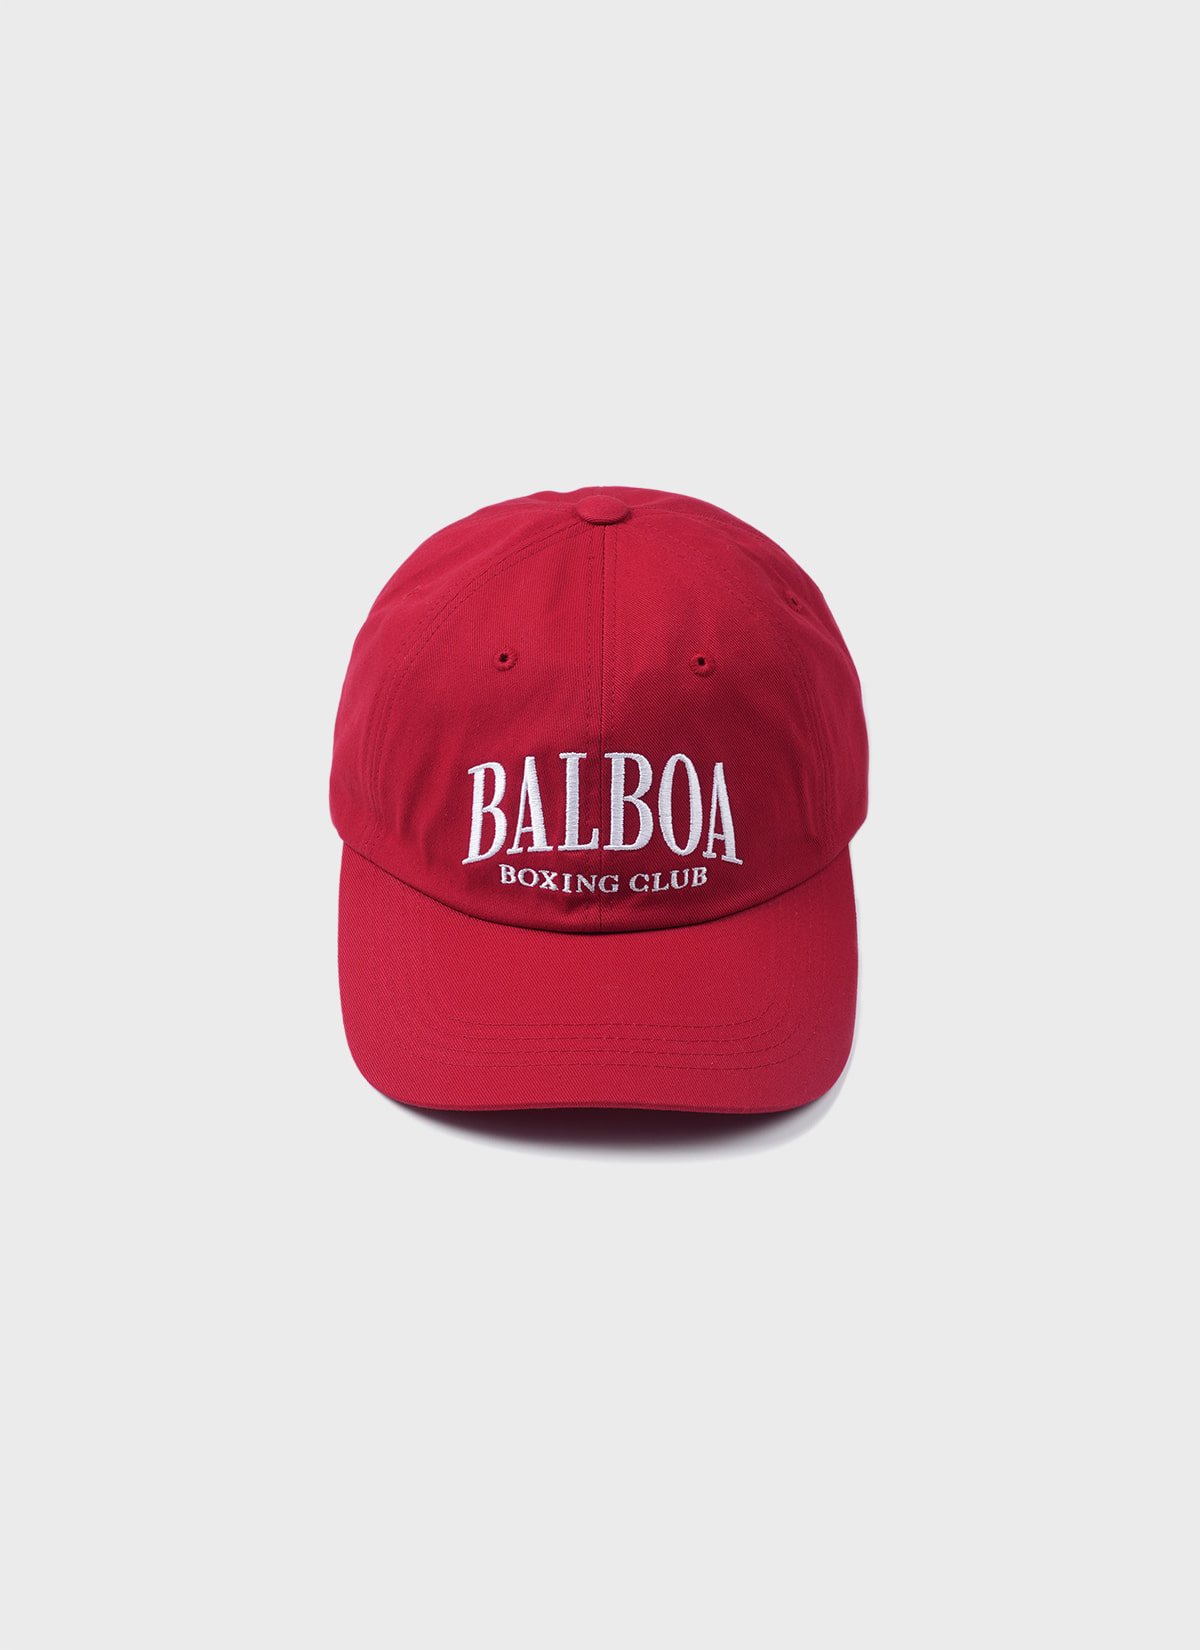 Balboa Boxing Club Ball Cap Red